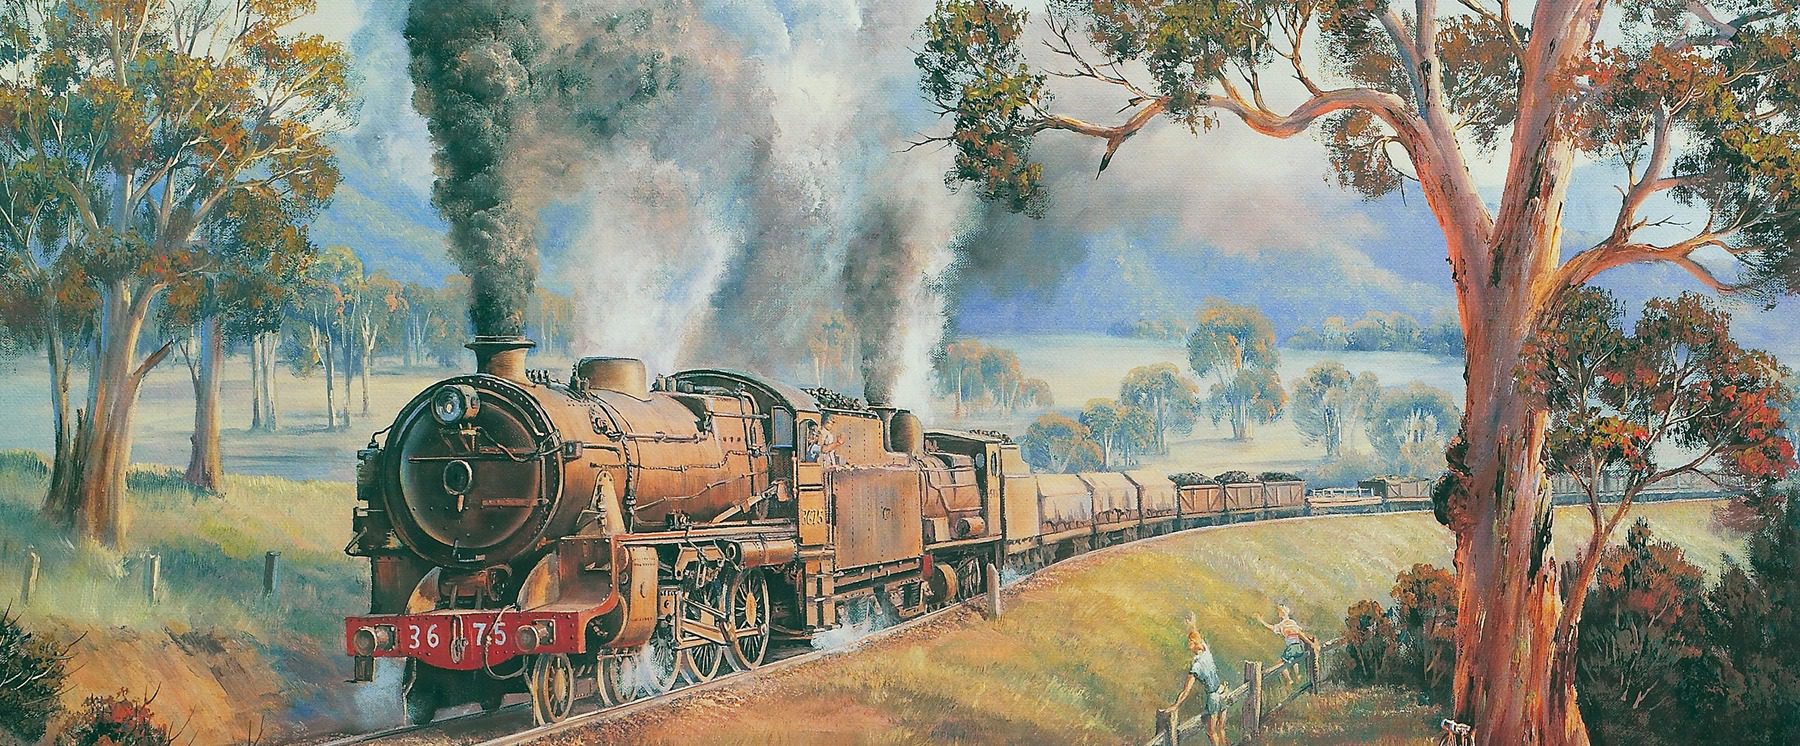 John Bradley Australia railway artist